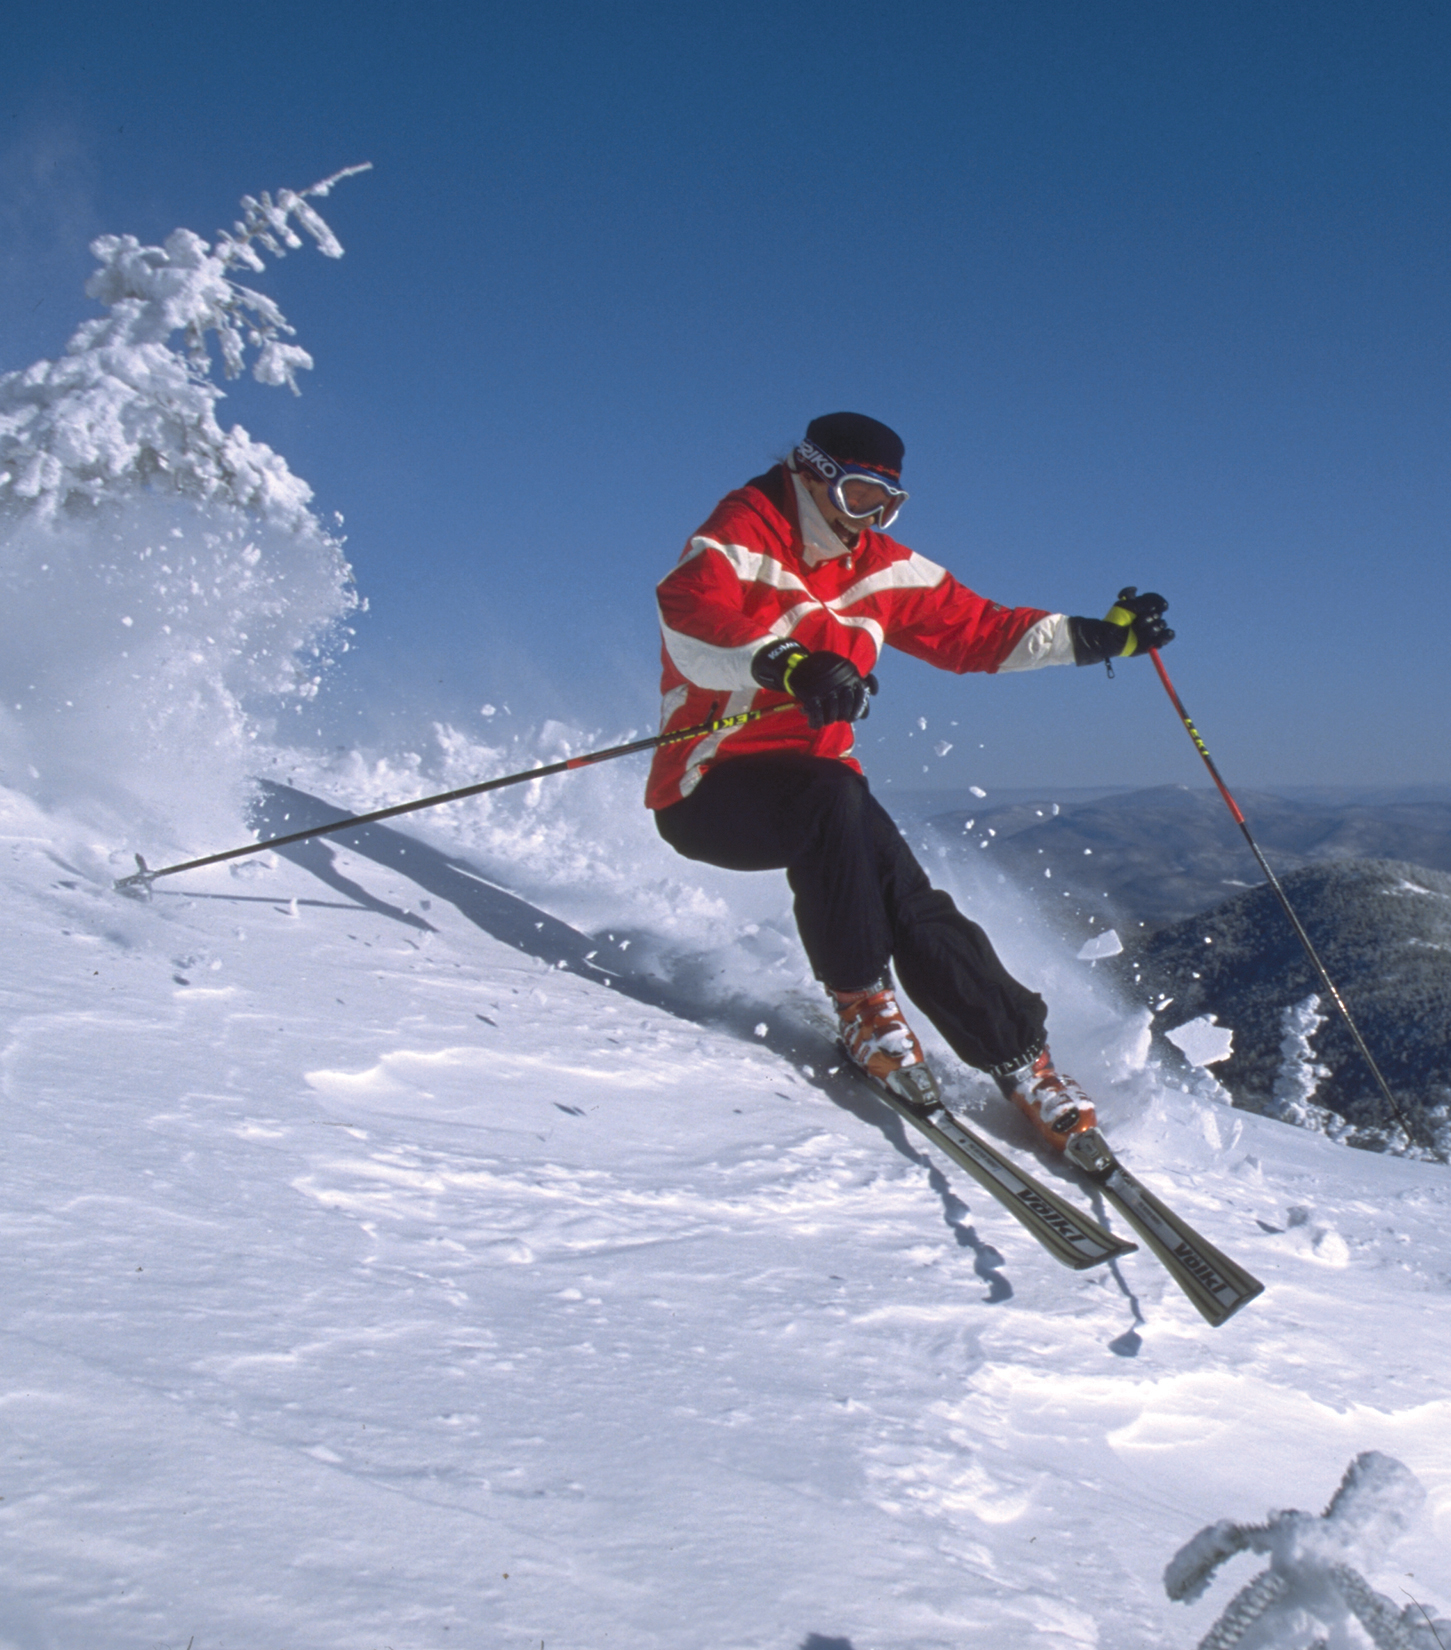 Ski n. Prince England Skiing. Aut Skikers. Skiing 2 get the Hammer.